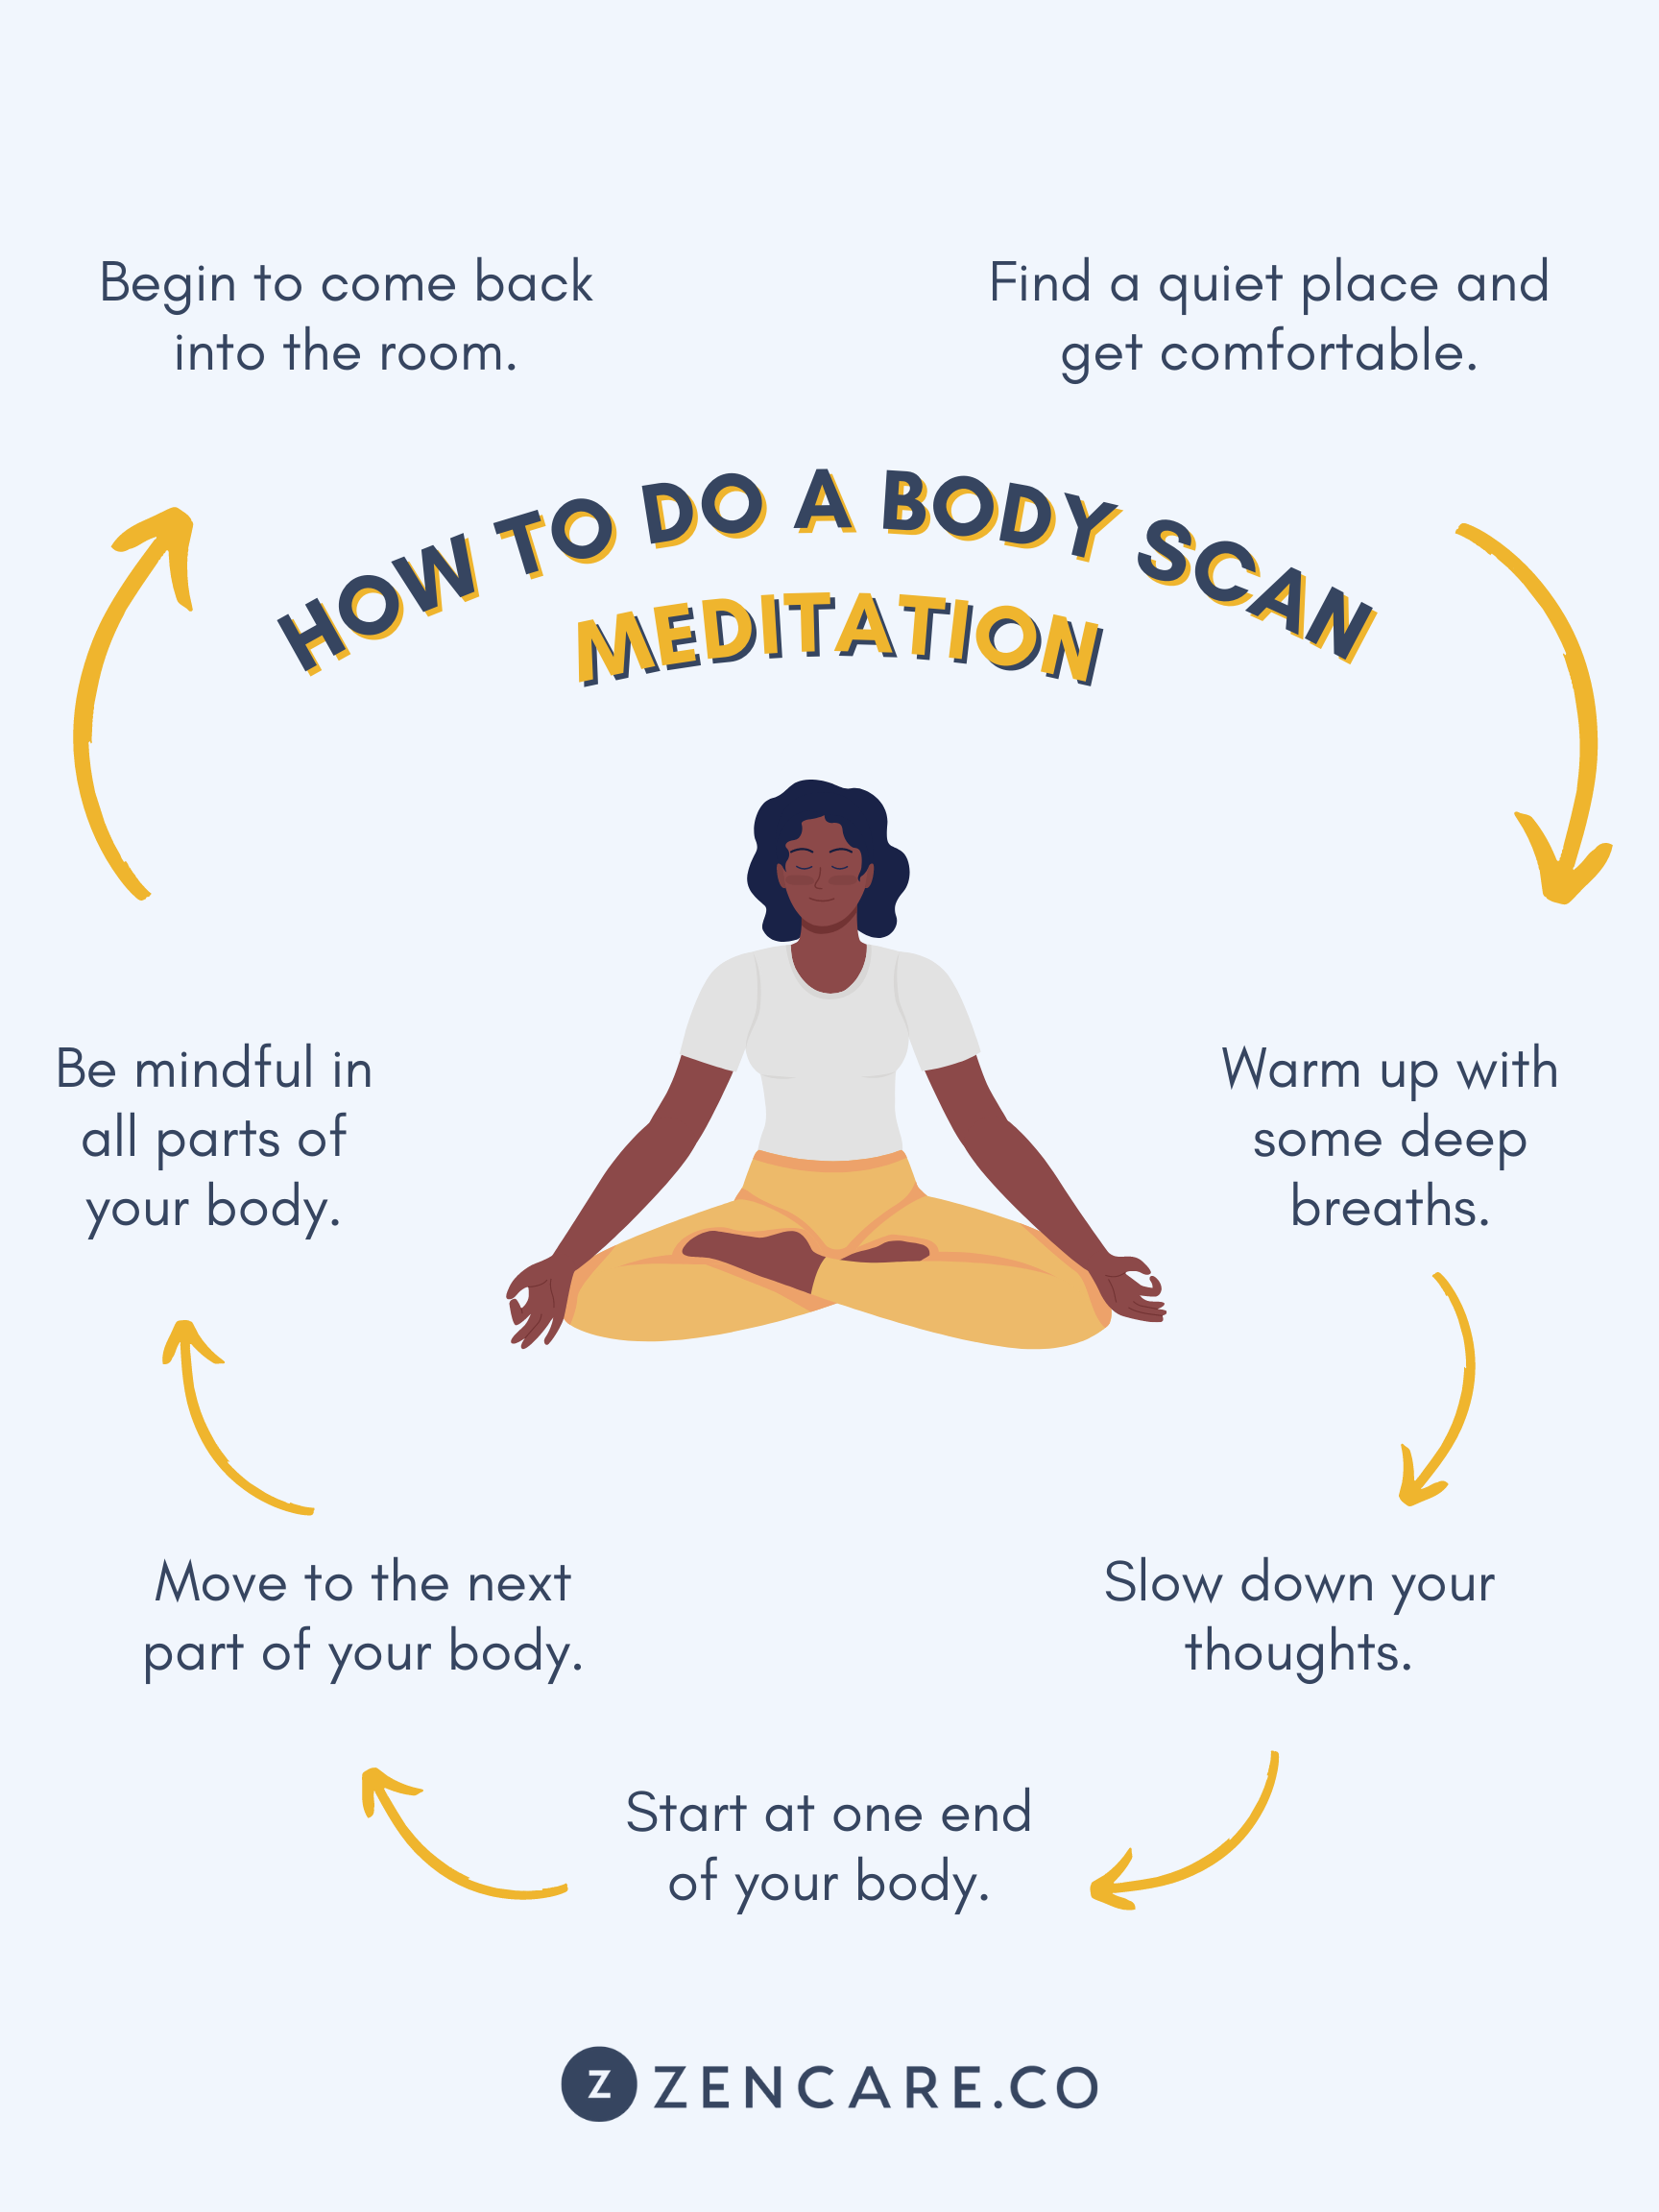 Body Scanning: Tool Mindfulness and Meditation